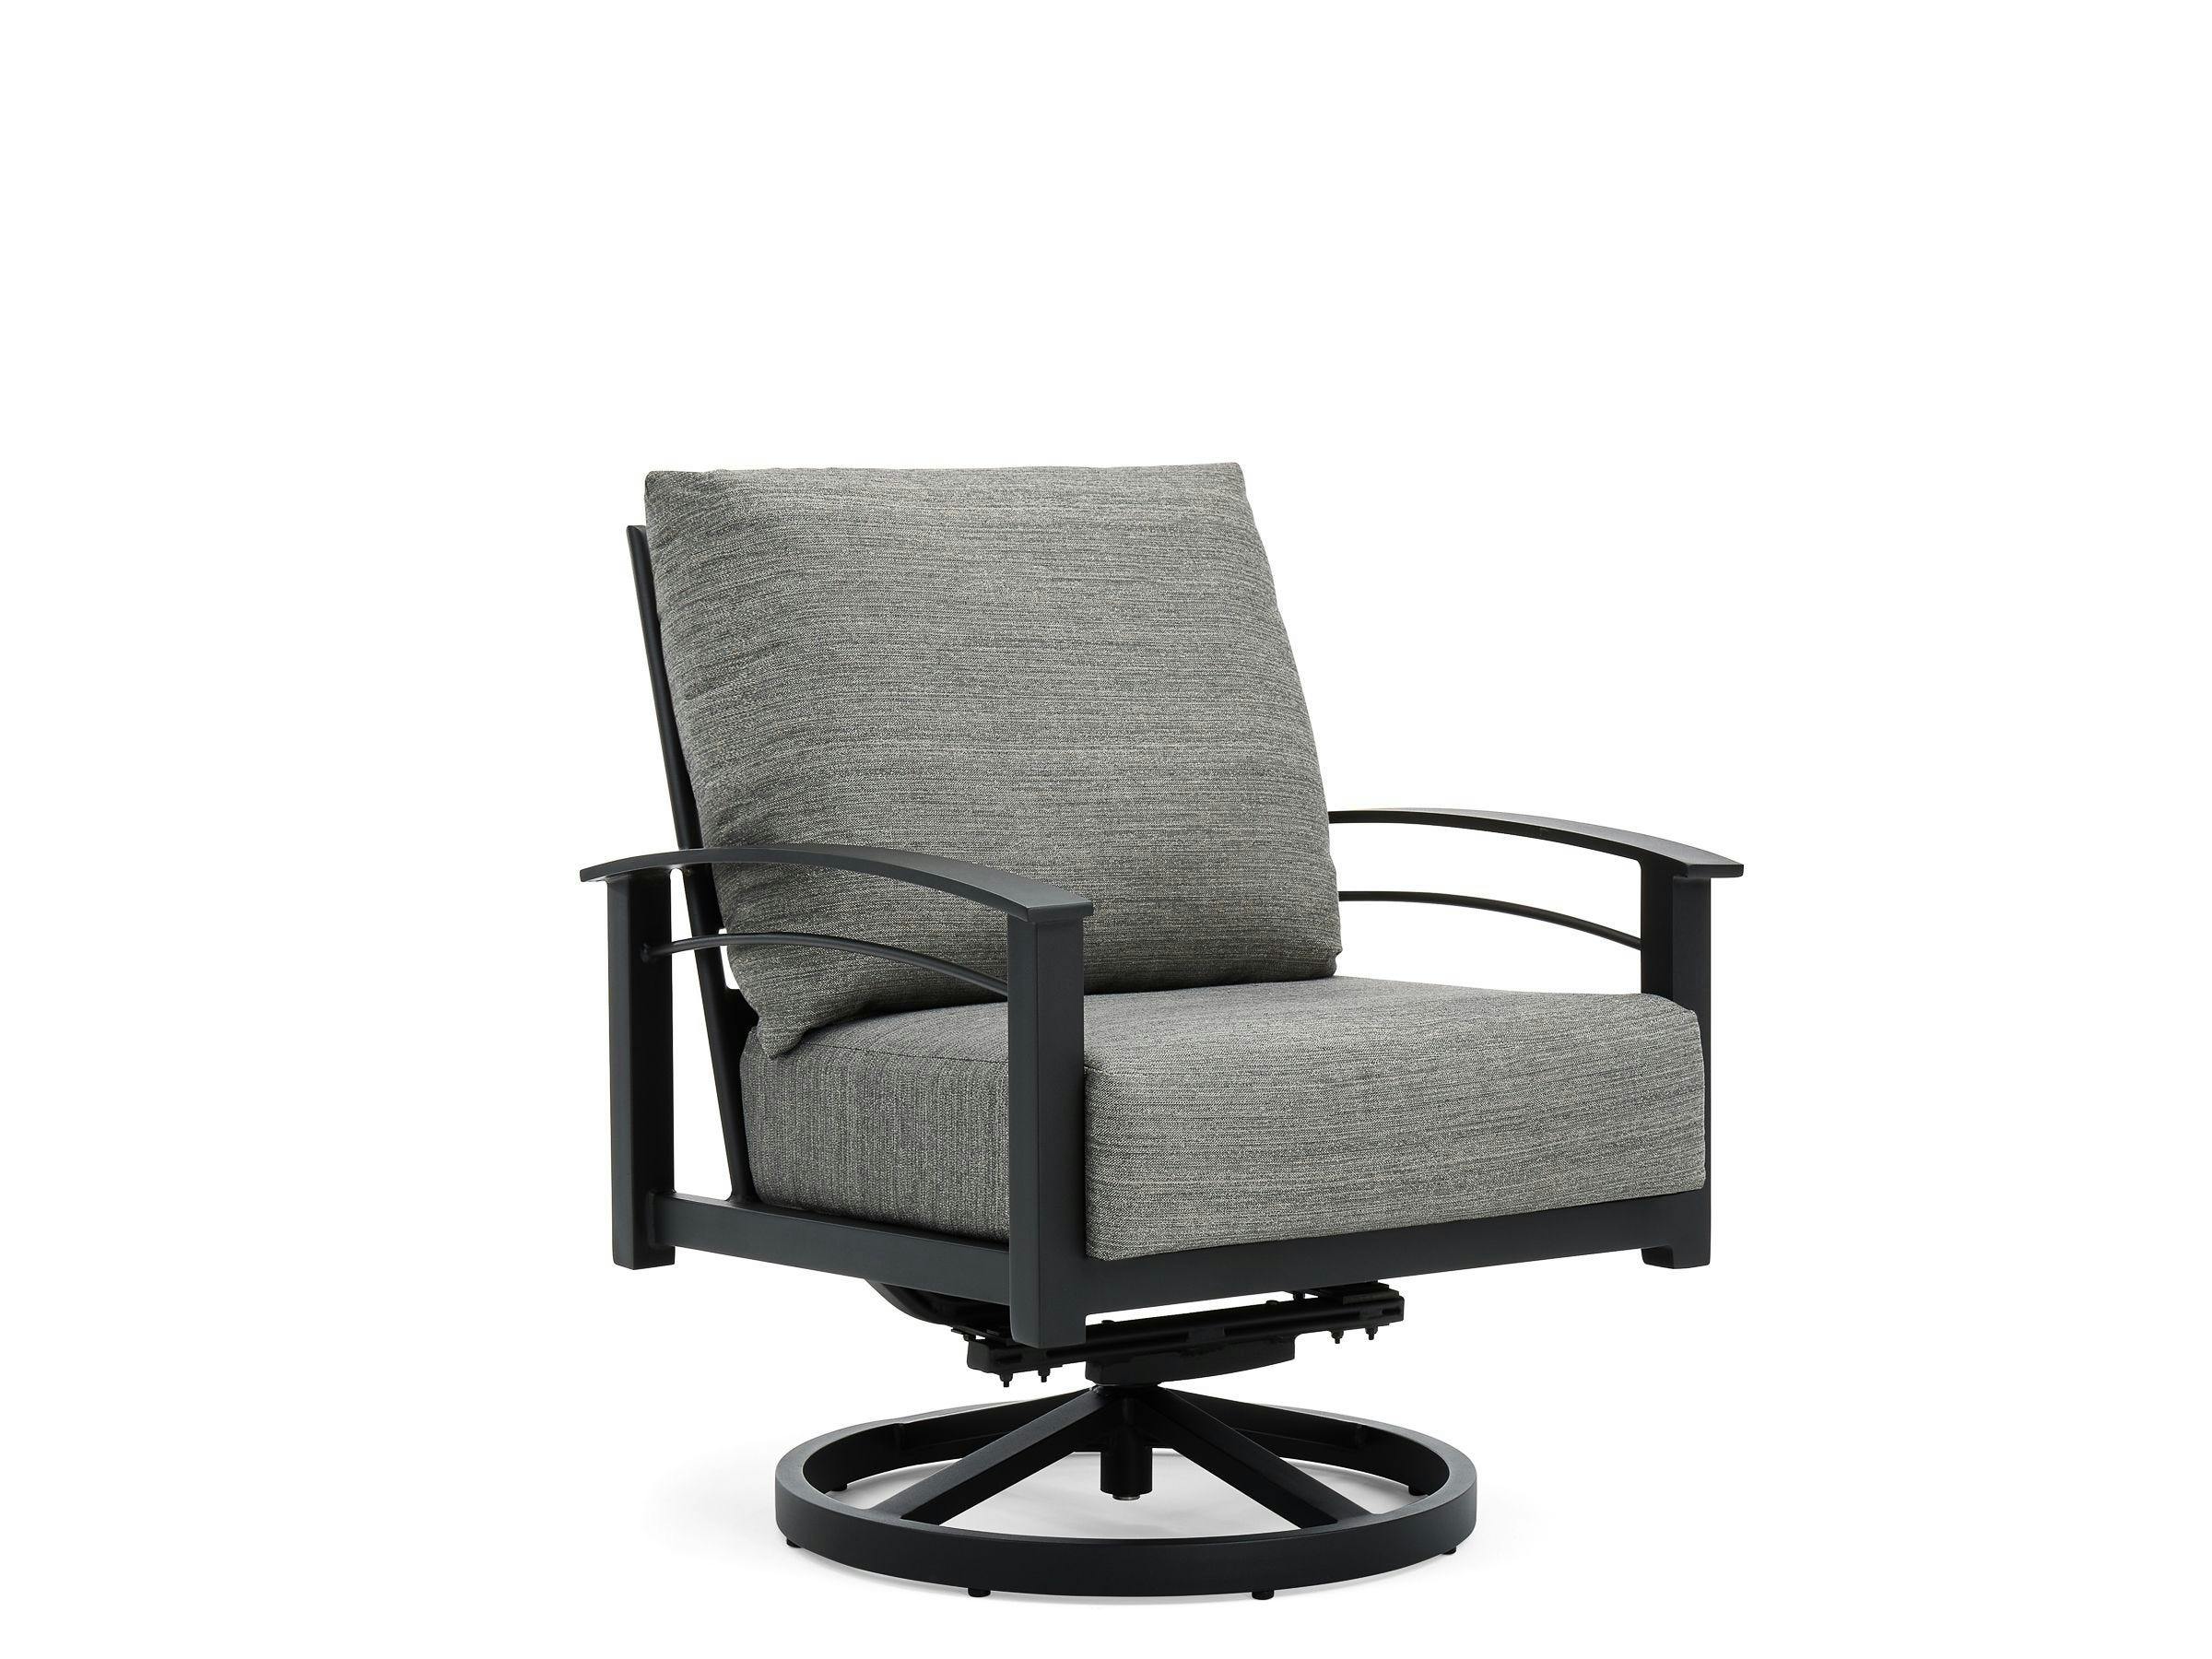 Stanford Cushion Swivel Rocker Lounge Chair   